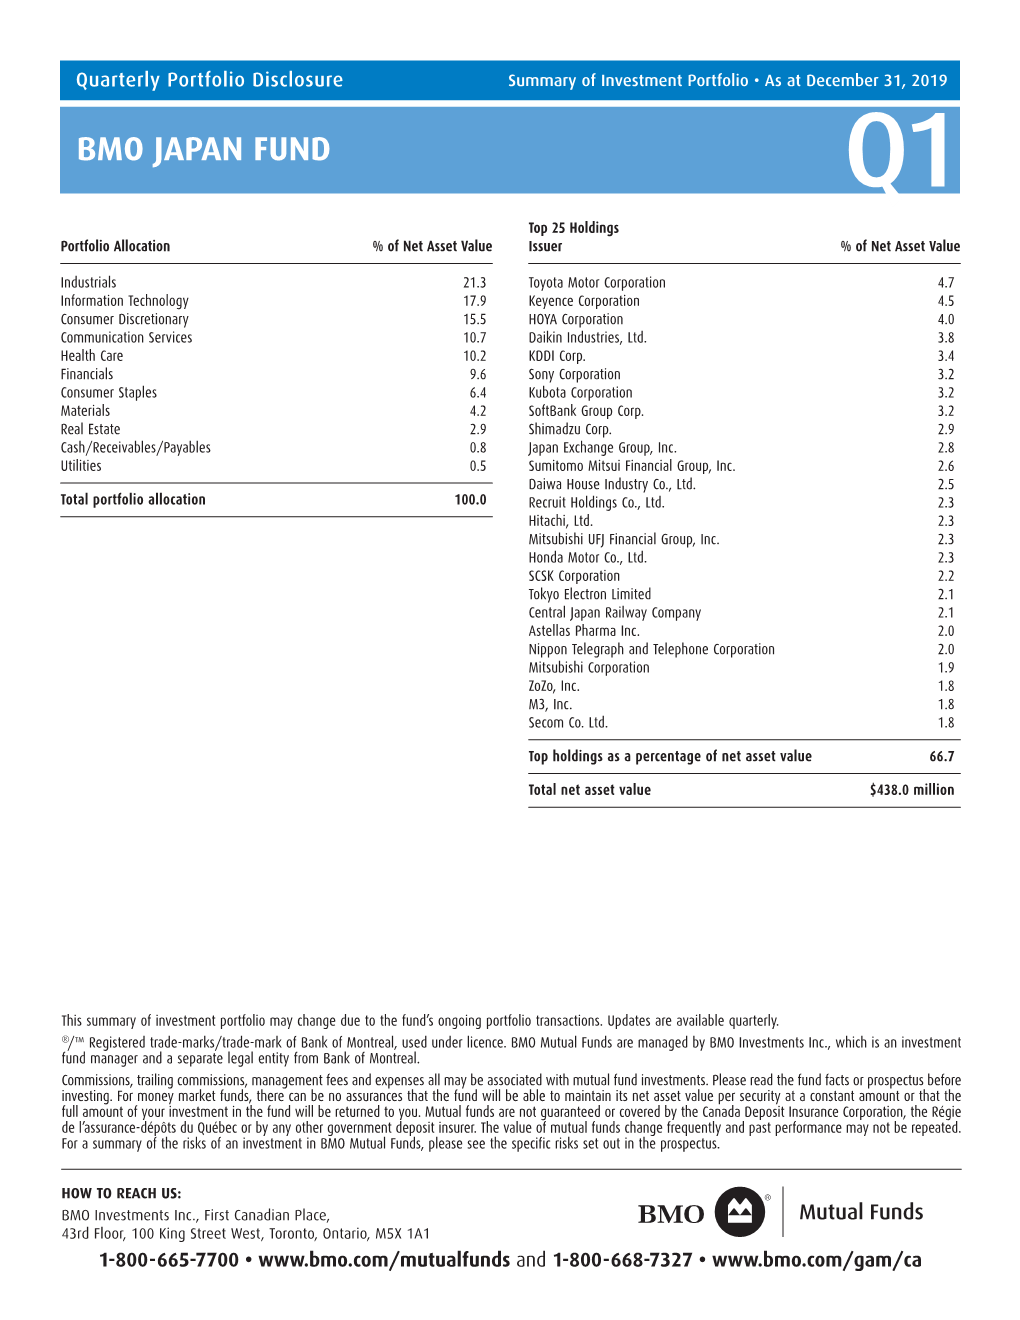 BMO JAPAN FUND Q1 Top 25 Holdings Portfolio Allocation % of Net Asset Value Issuer % of Net Asset Value